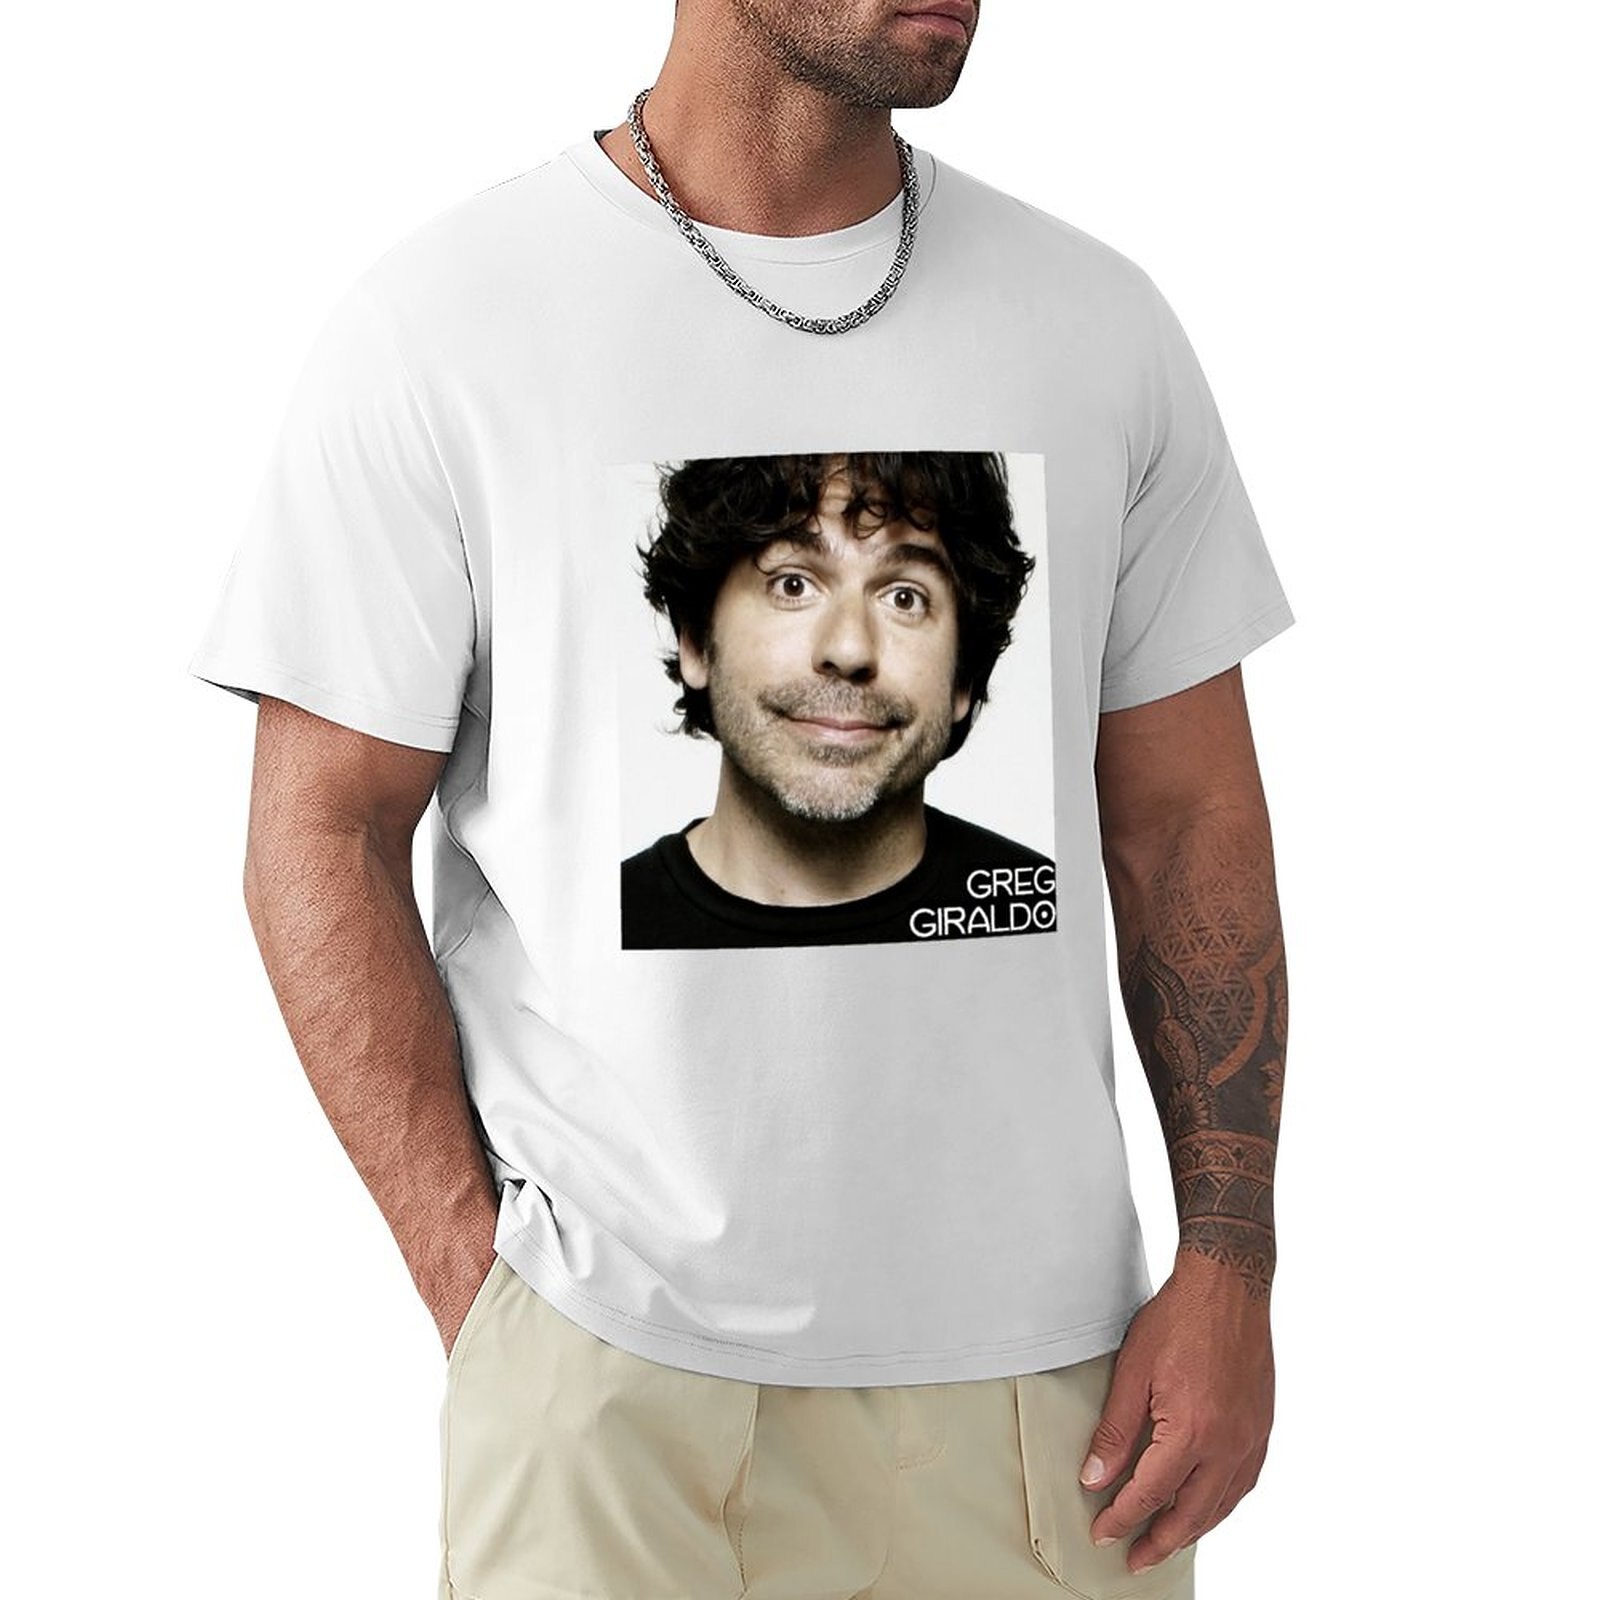 Greg Giraldo 남성용 속건성 티셔츠, 남자 흰색 티셔츠, 남자 의류